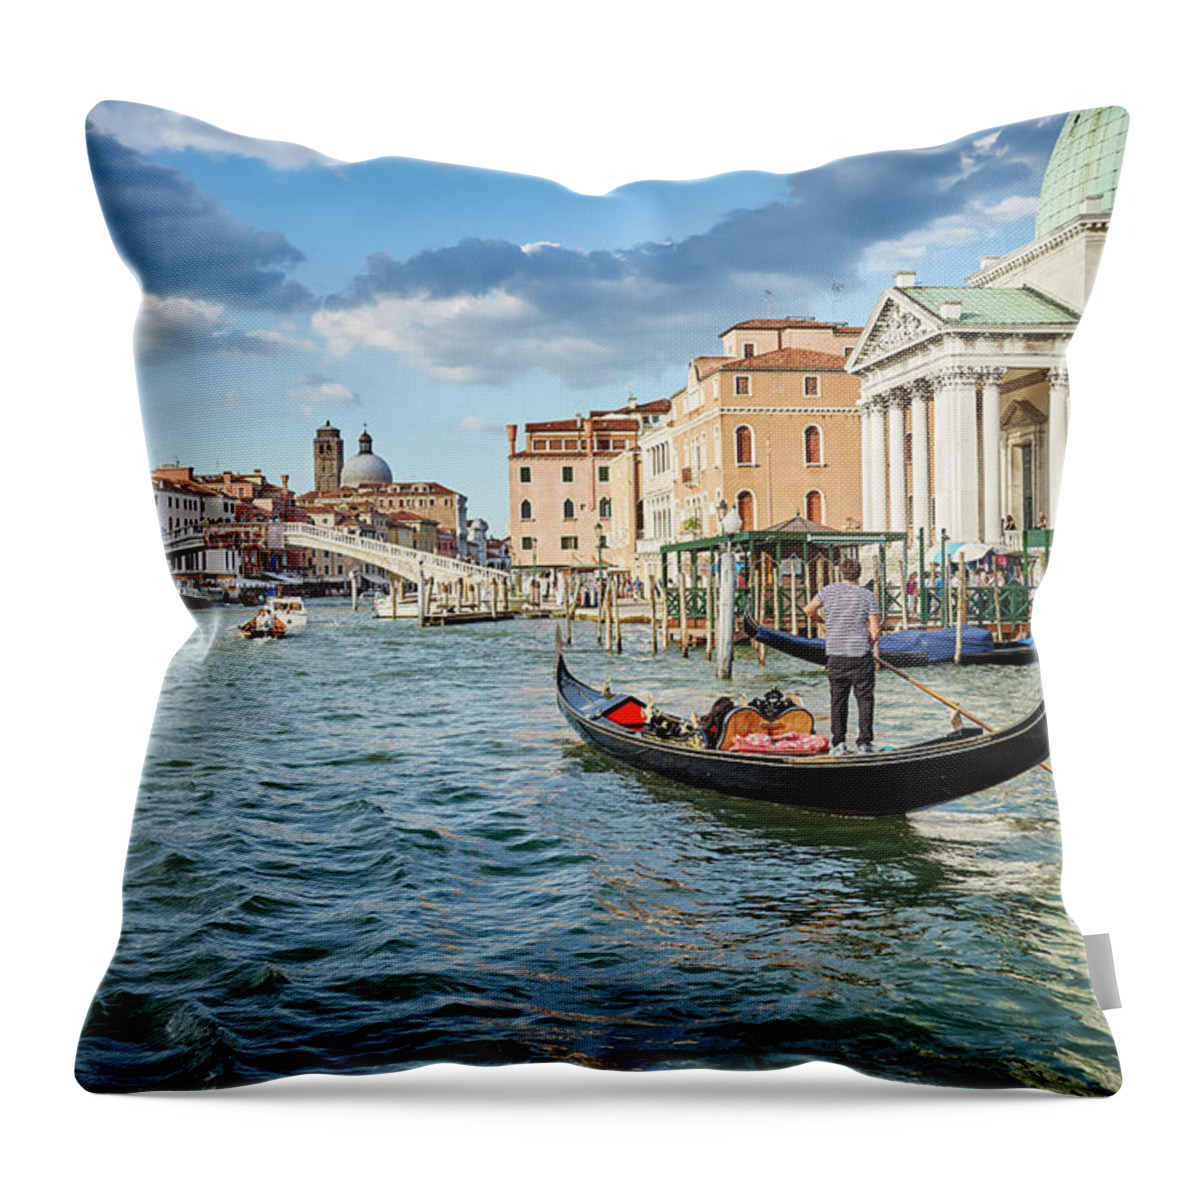 Fine Art Throw Pillow featuring the photograph Dsc9528 - Ponte degli Scalzi, Venice by Marco Missiaja